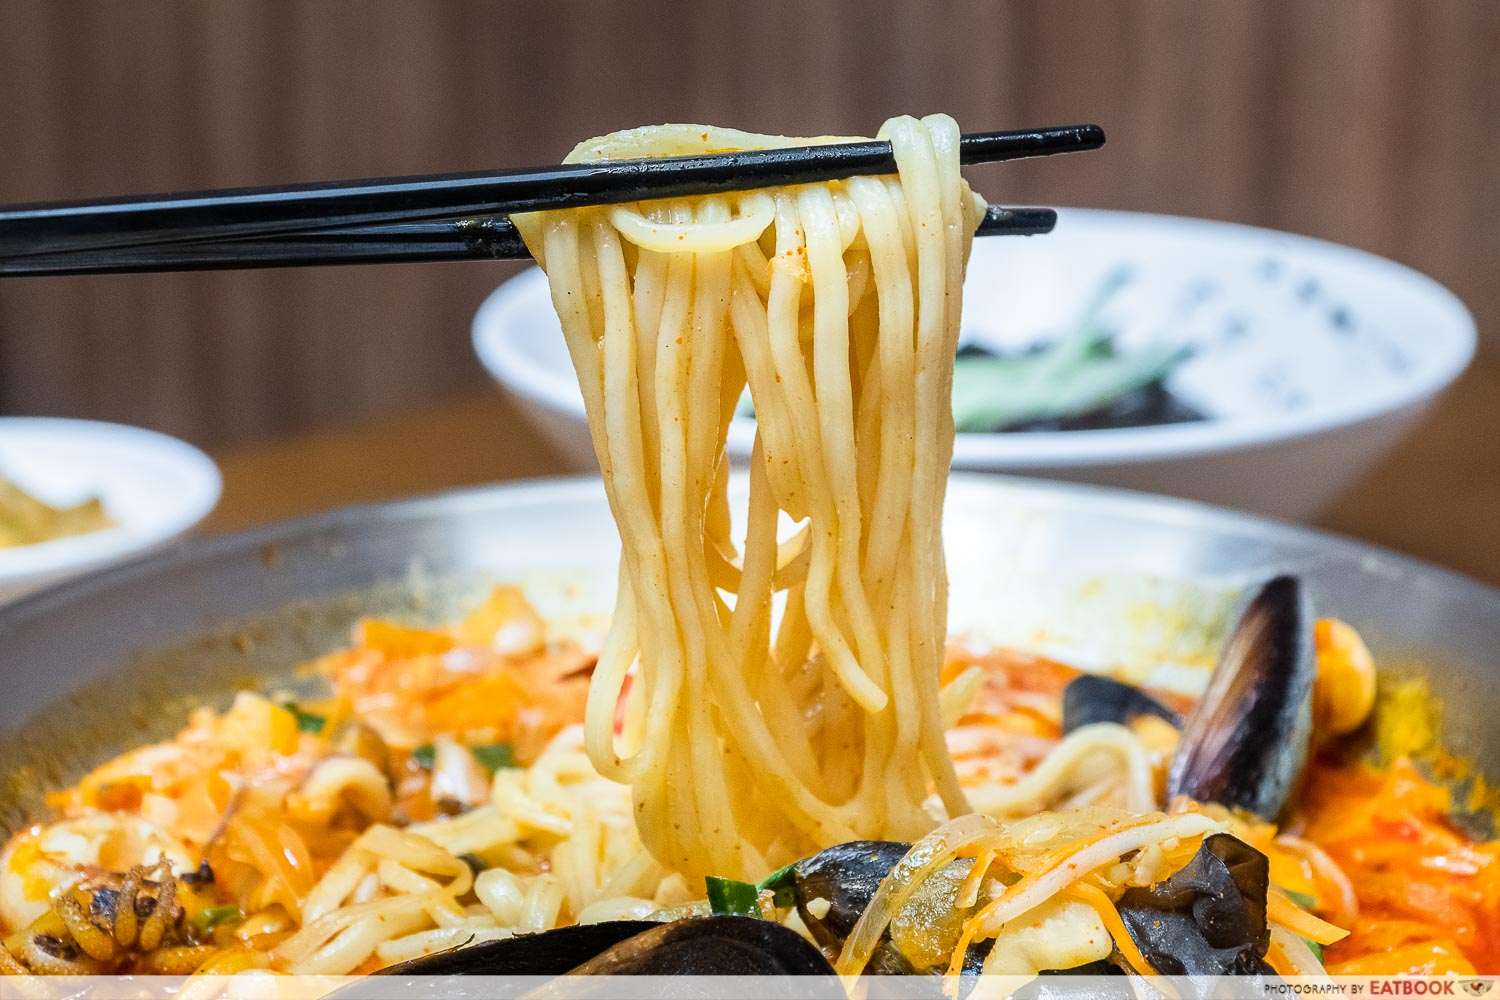 itaewon-jjajang-jjamppong-noodles